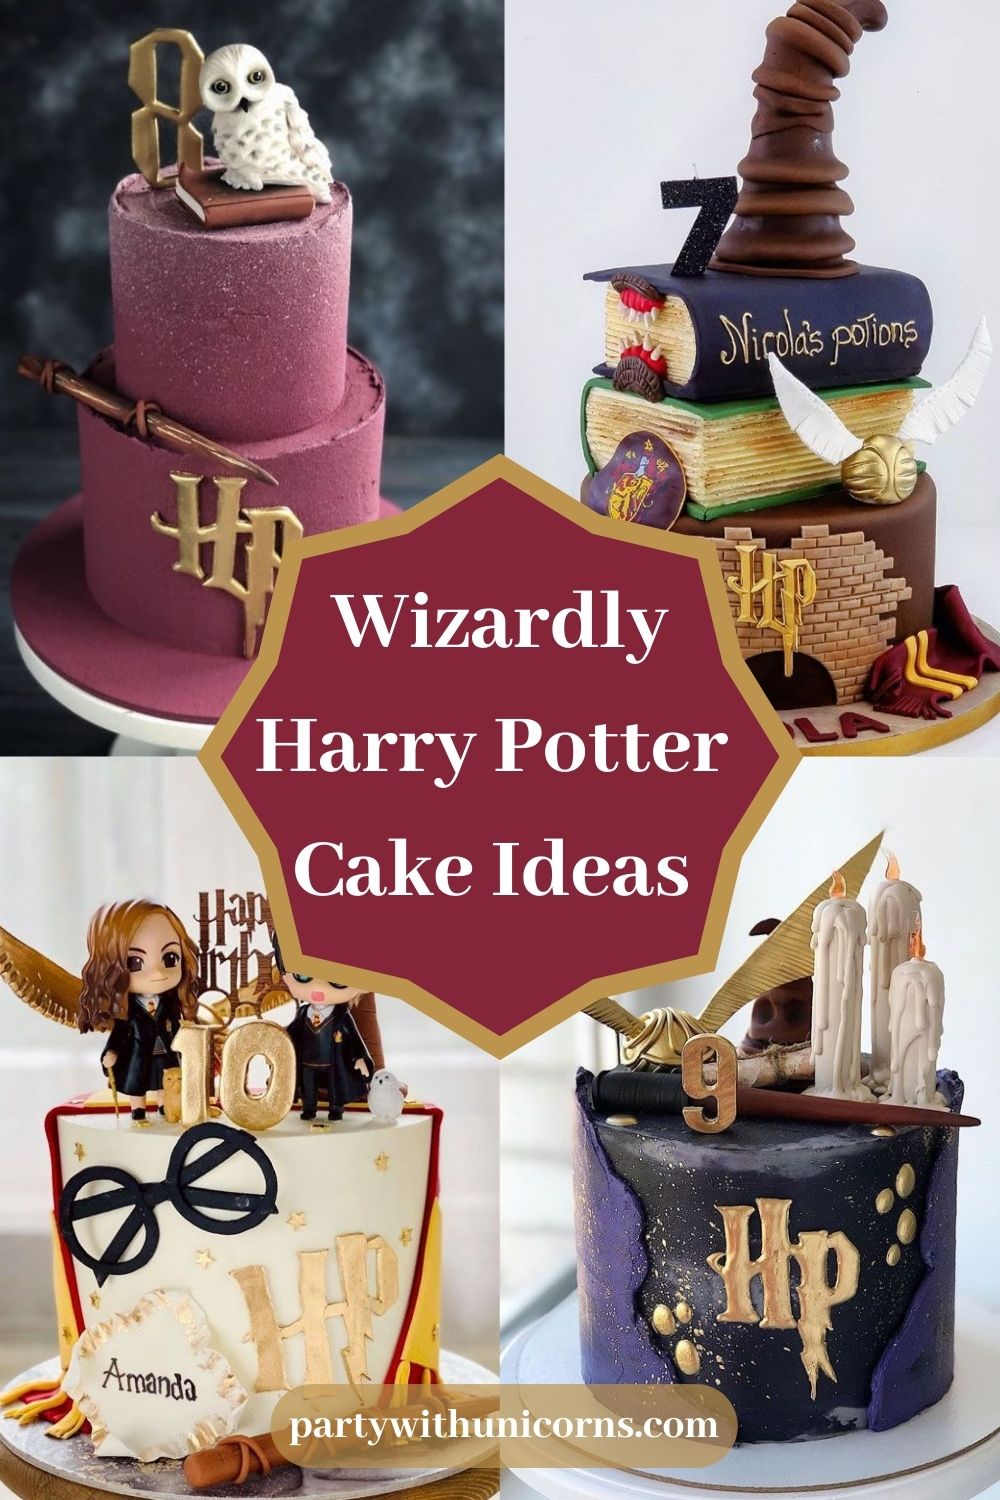 Harry Potter Birthday Cake - DIY - YouTube